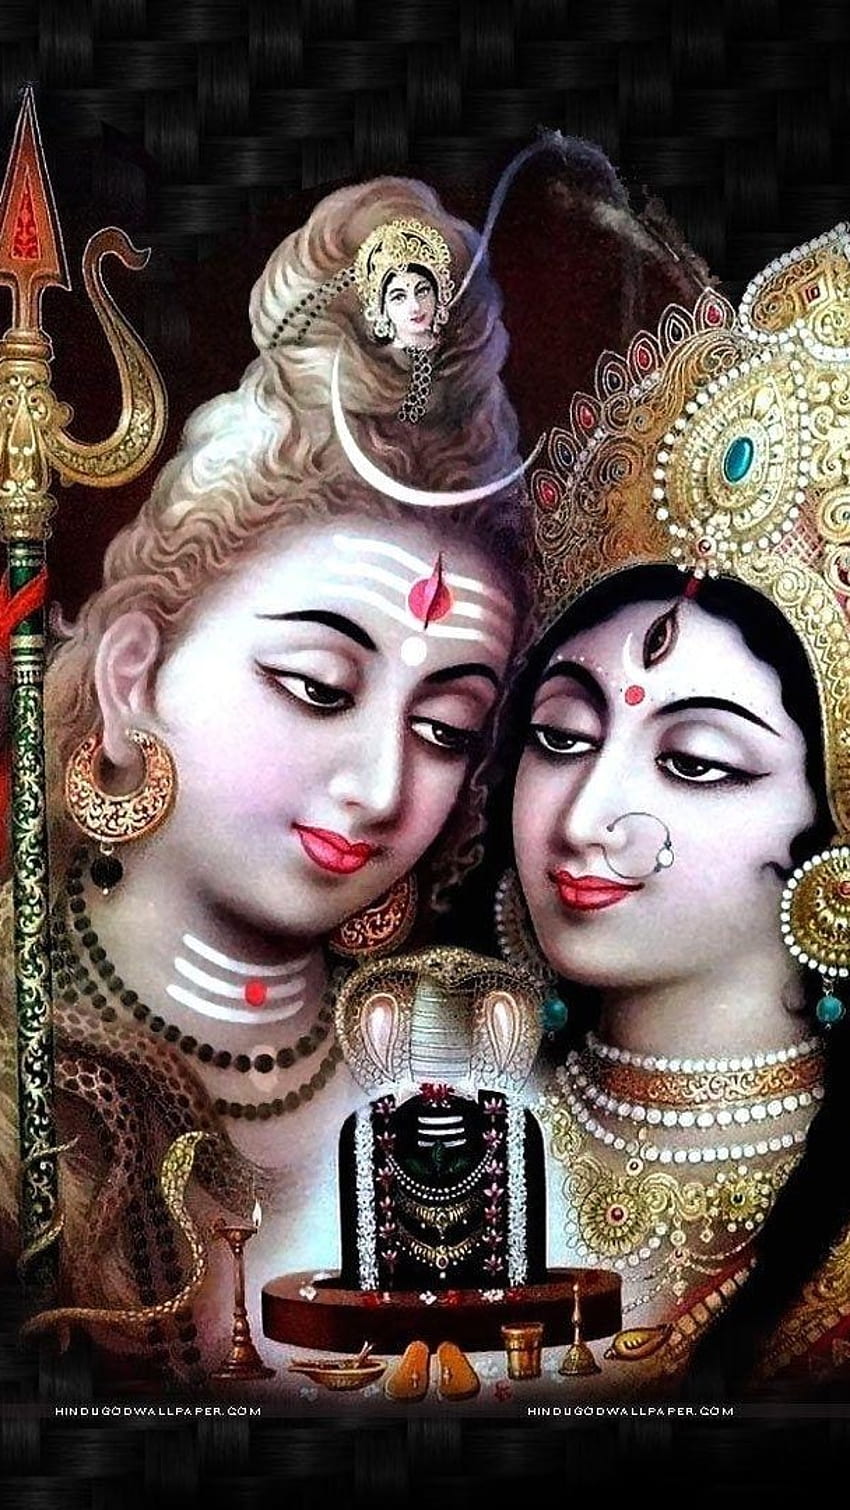 Astonishing Compilation Of Full K Lord Shiva Parvati Images Over